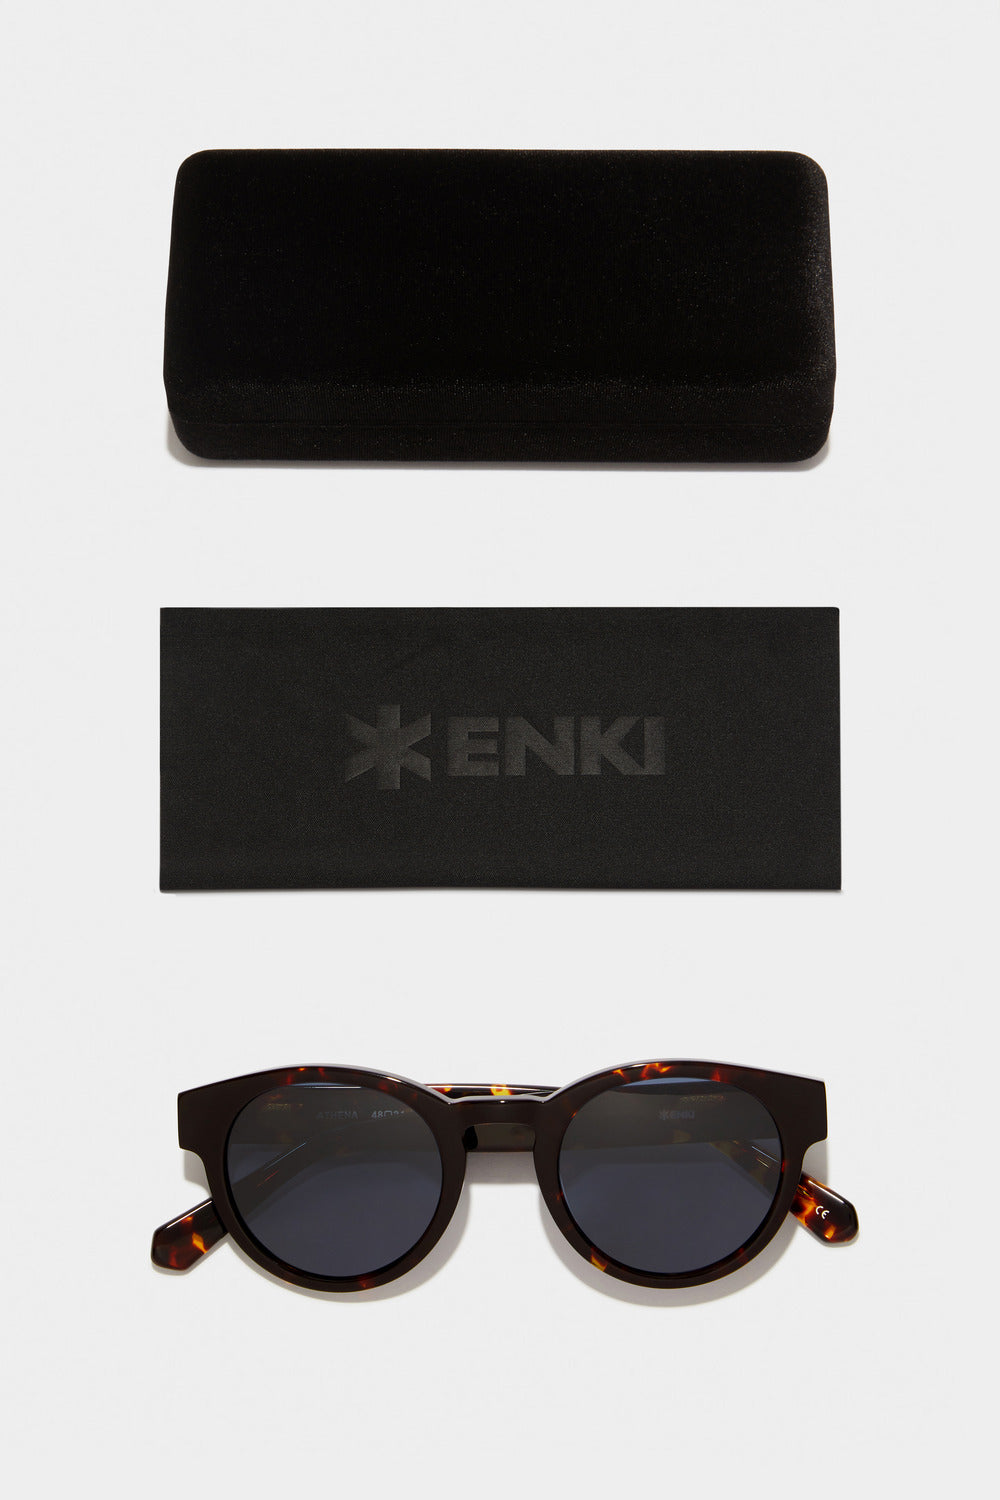 www.enkieyewear.com Athena Men’s and Women’s Sunglasses